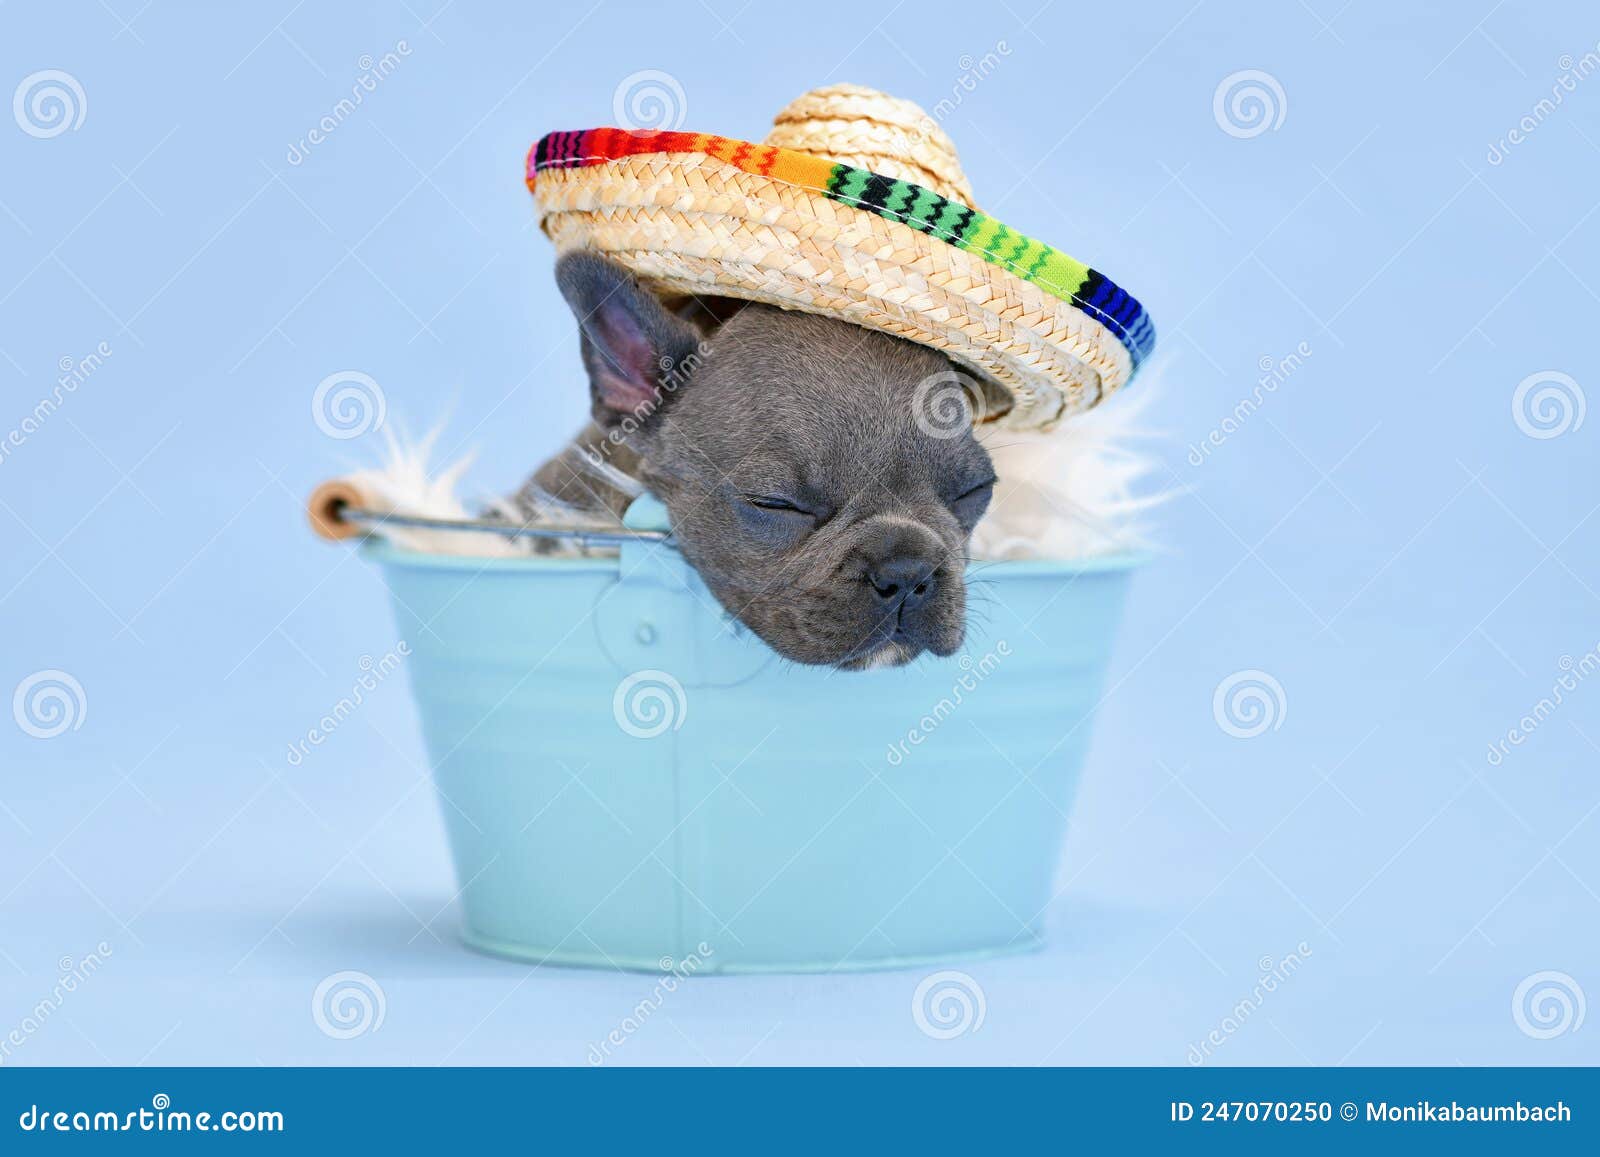 sleeping french bulldog dog puppy with summer straw hat in bucket on blue background